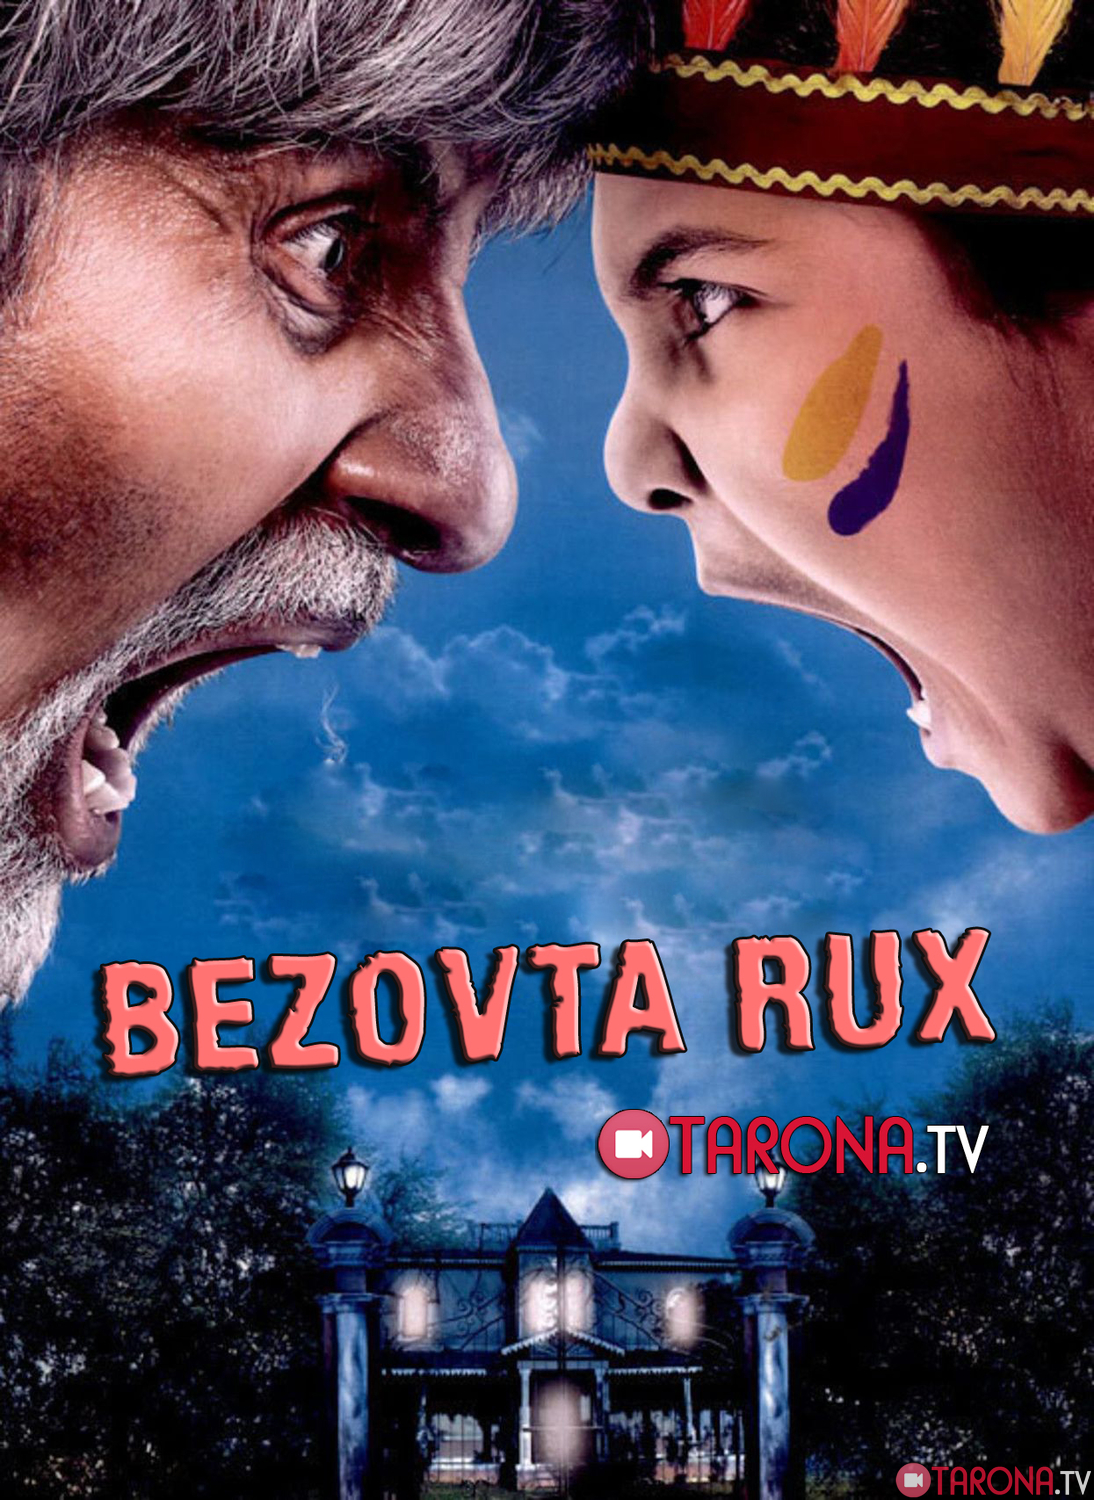 Bezovta ruh (Hind kino, uzbek tilida) 2008